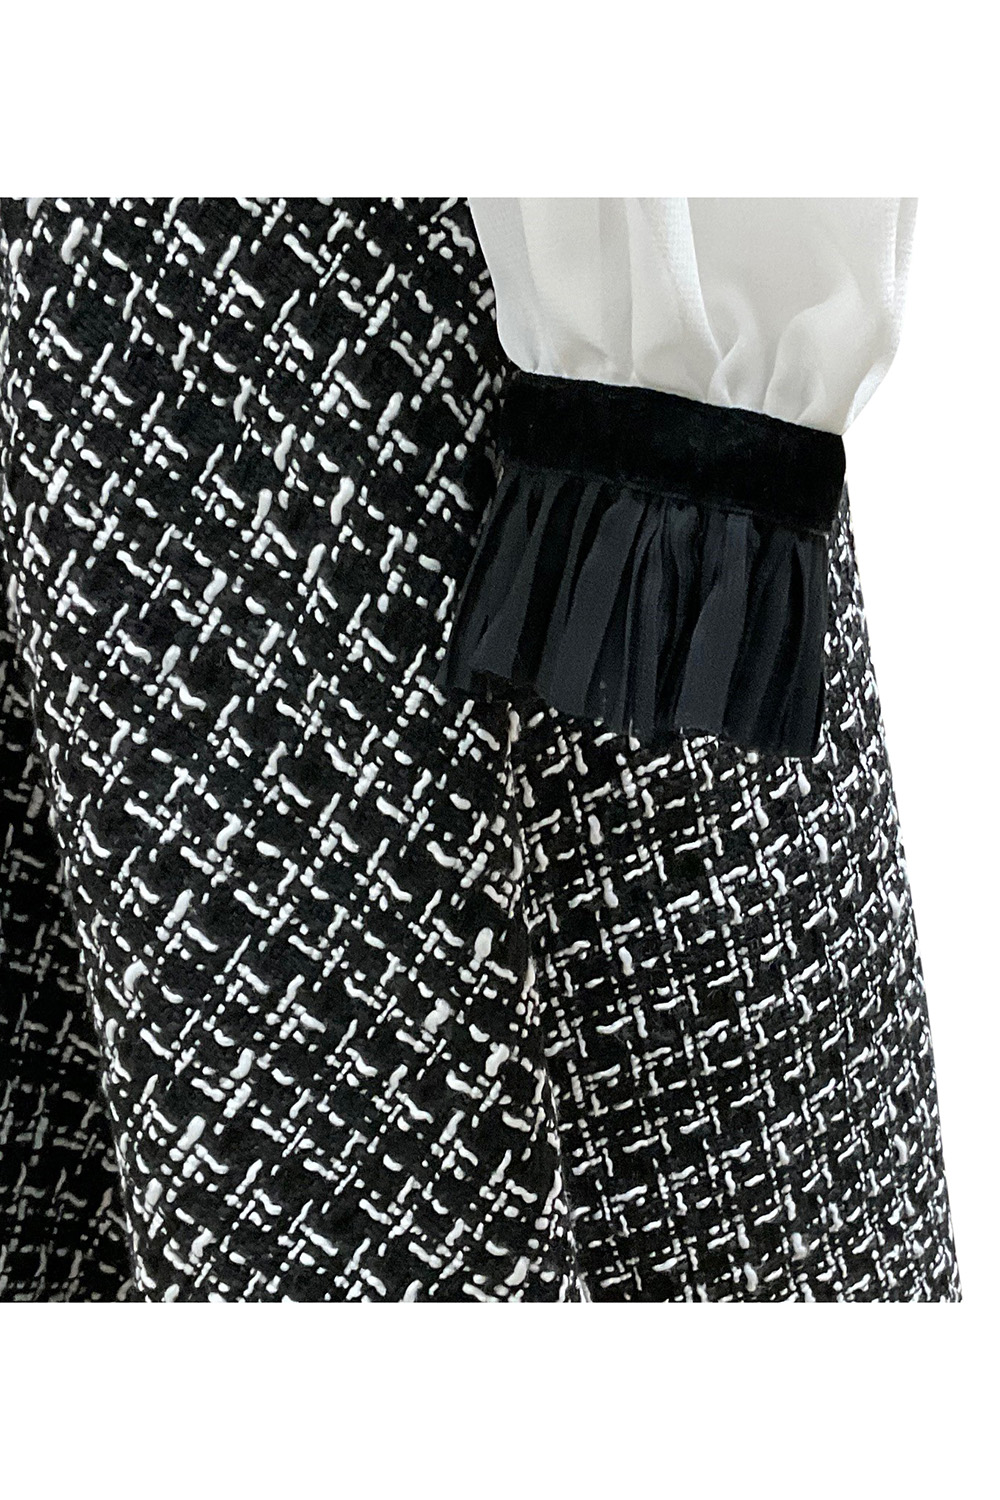 Black and Ivory Tweed Dress